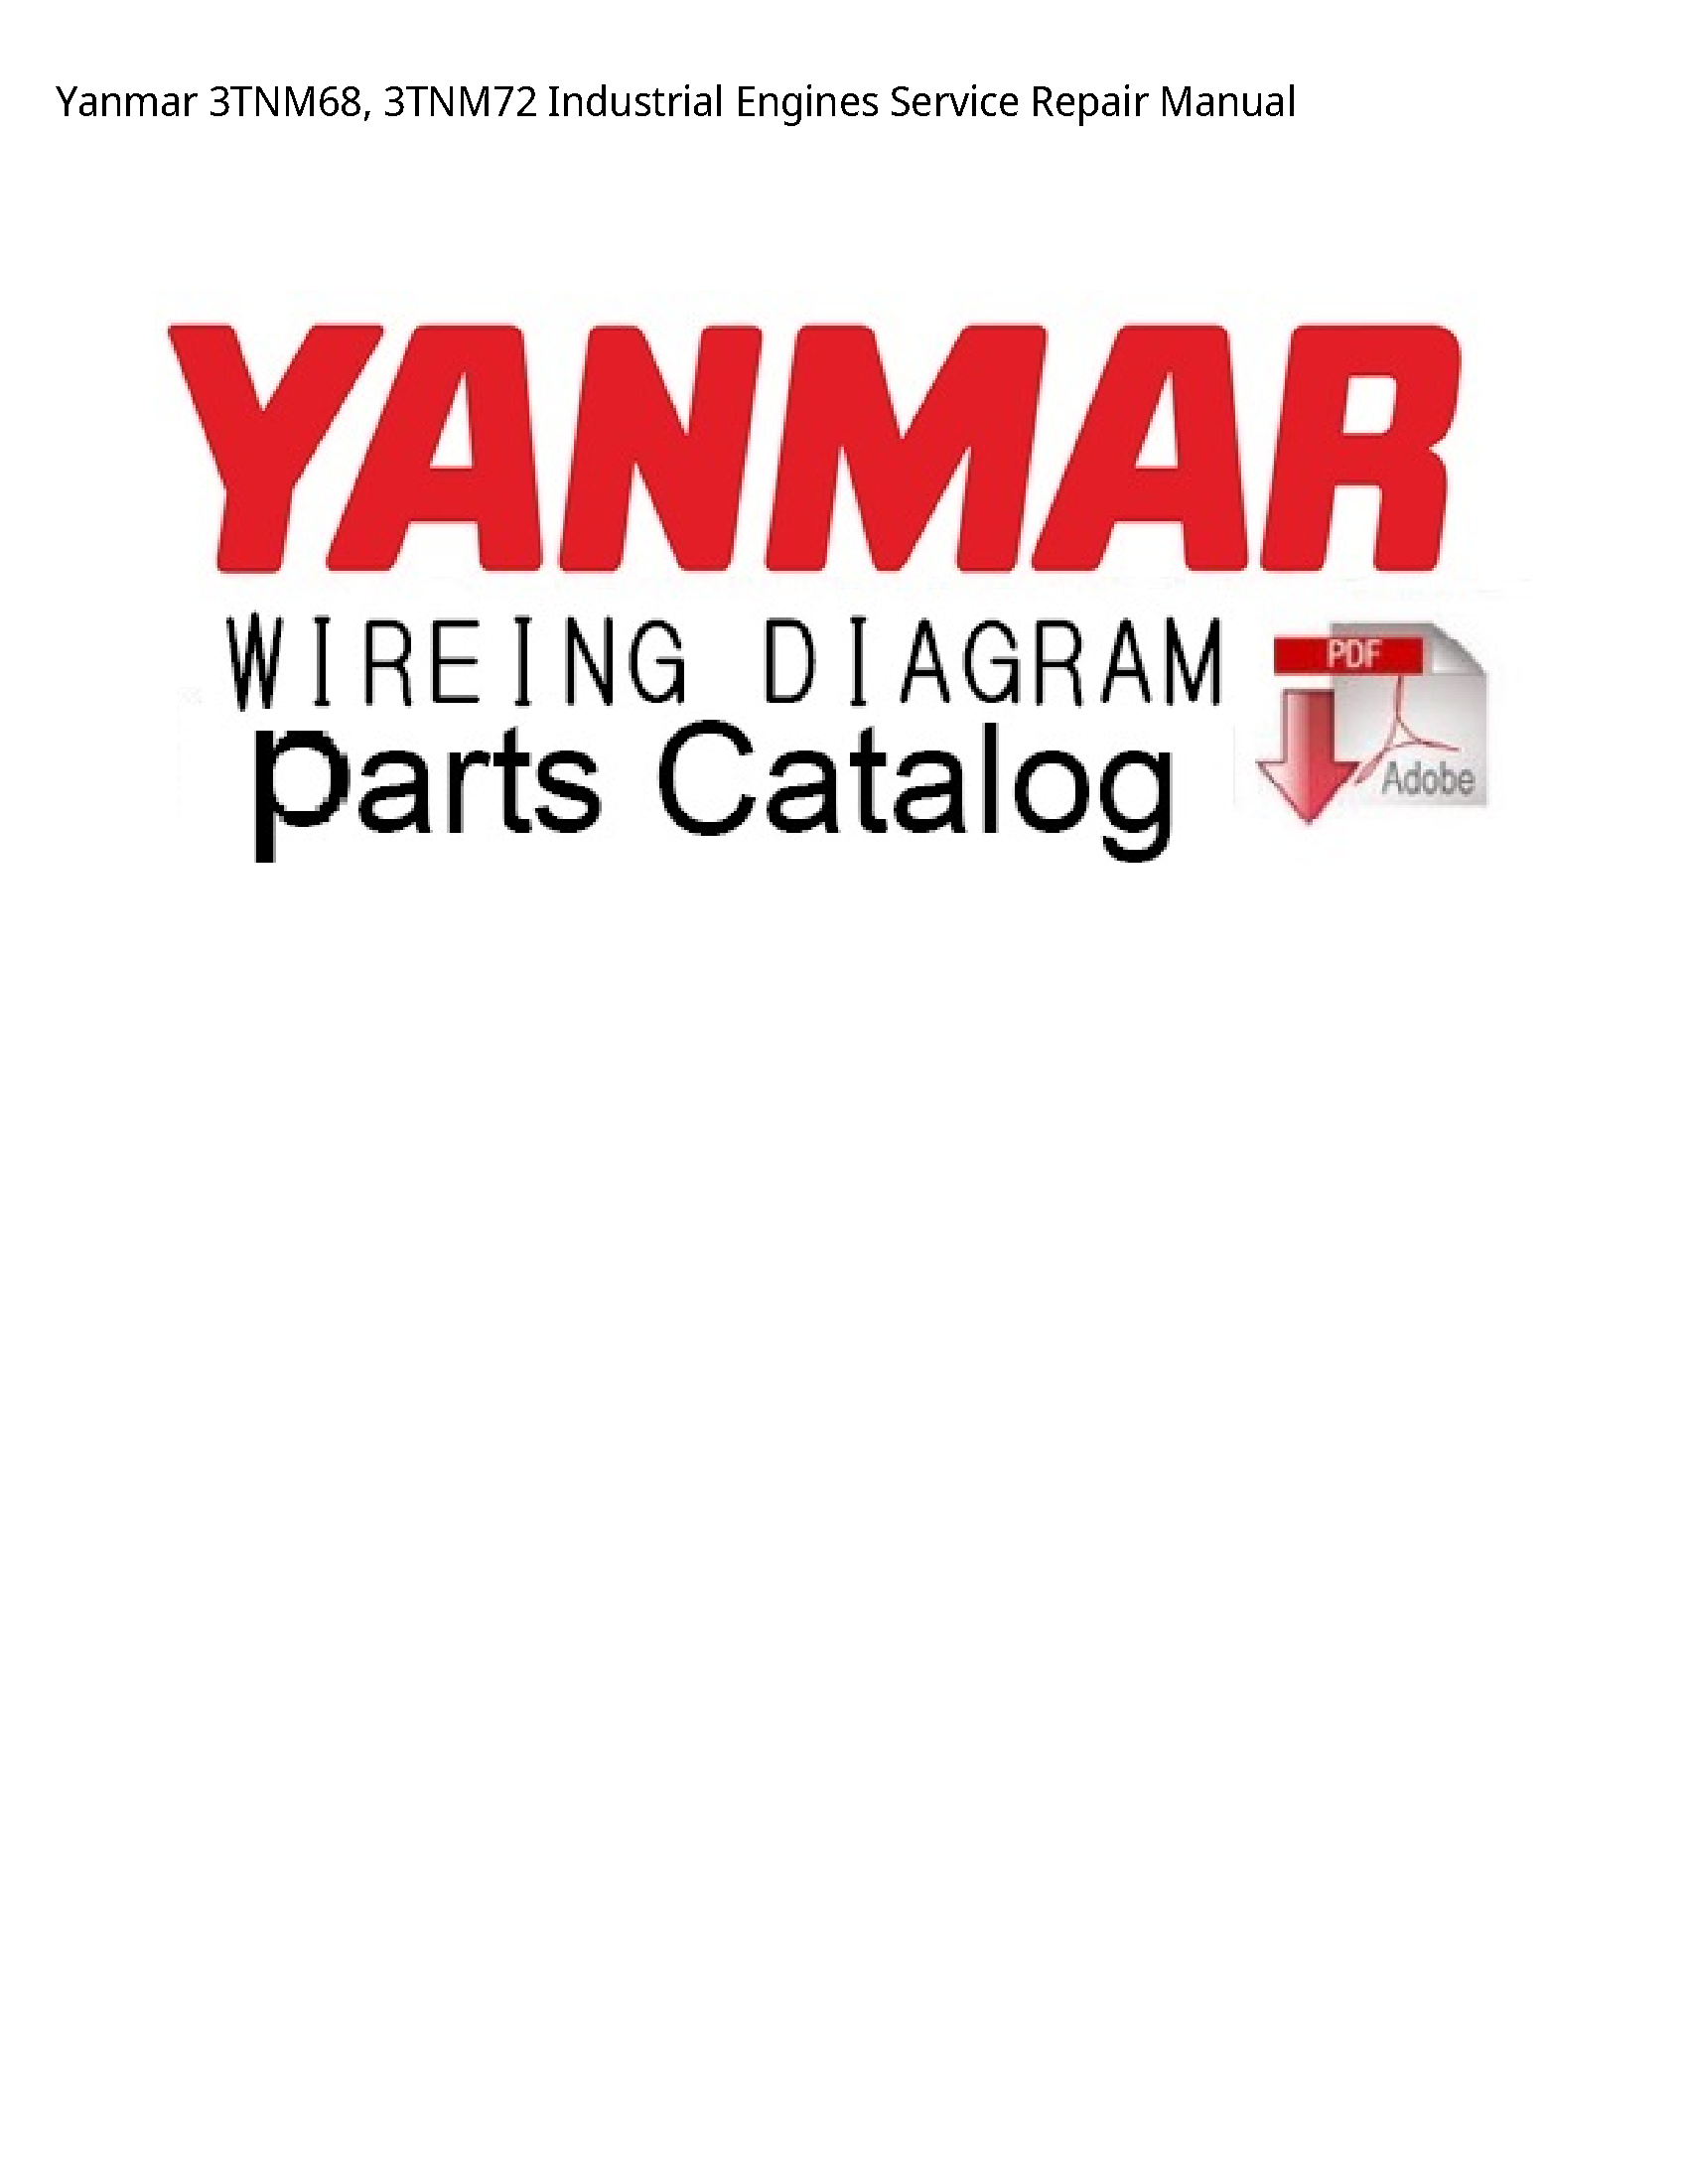 Yanmar 3TNM68 Industrial Engines manual